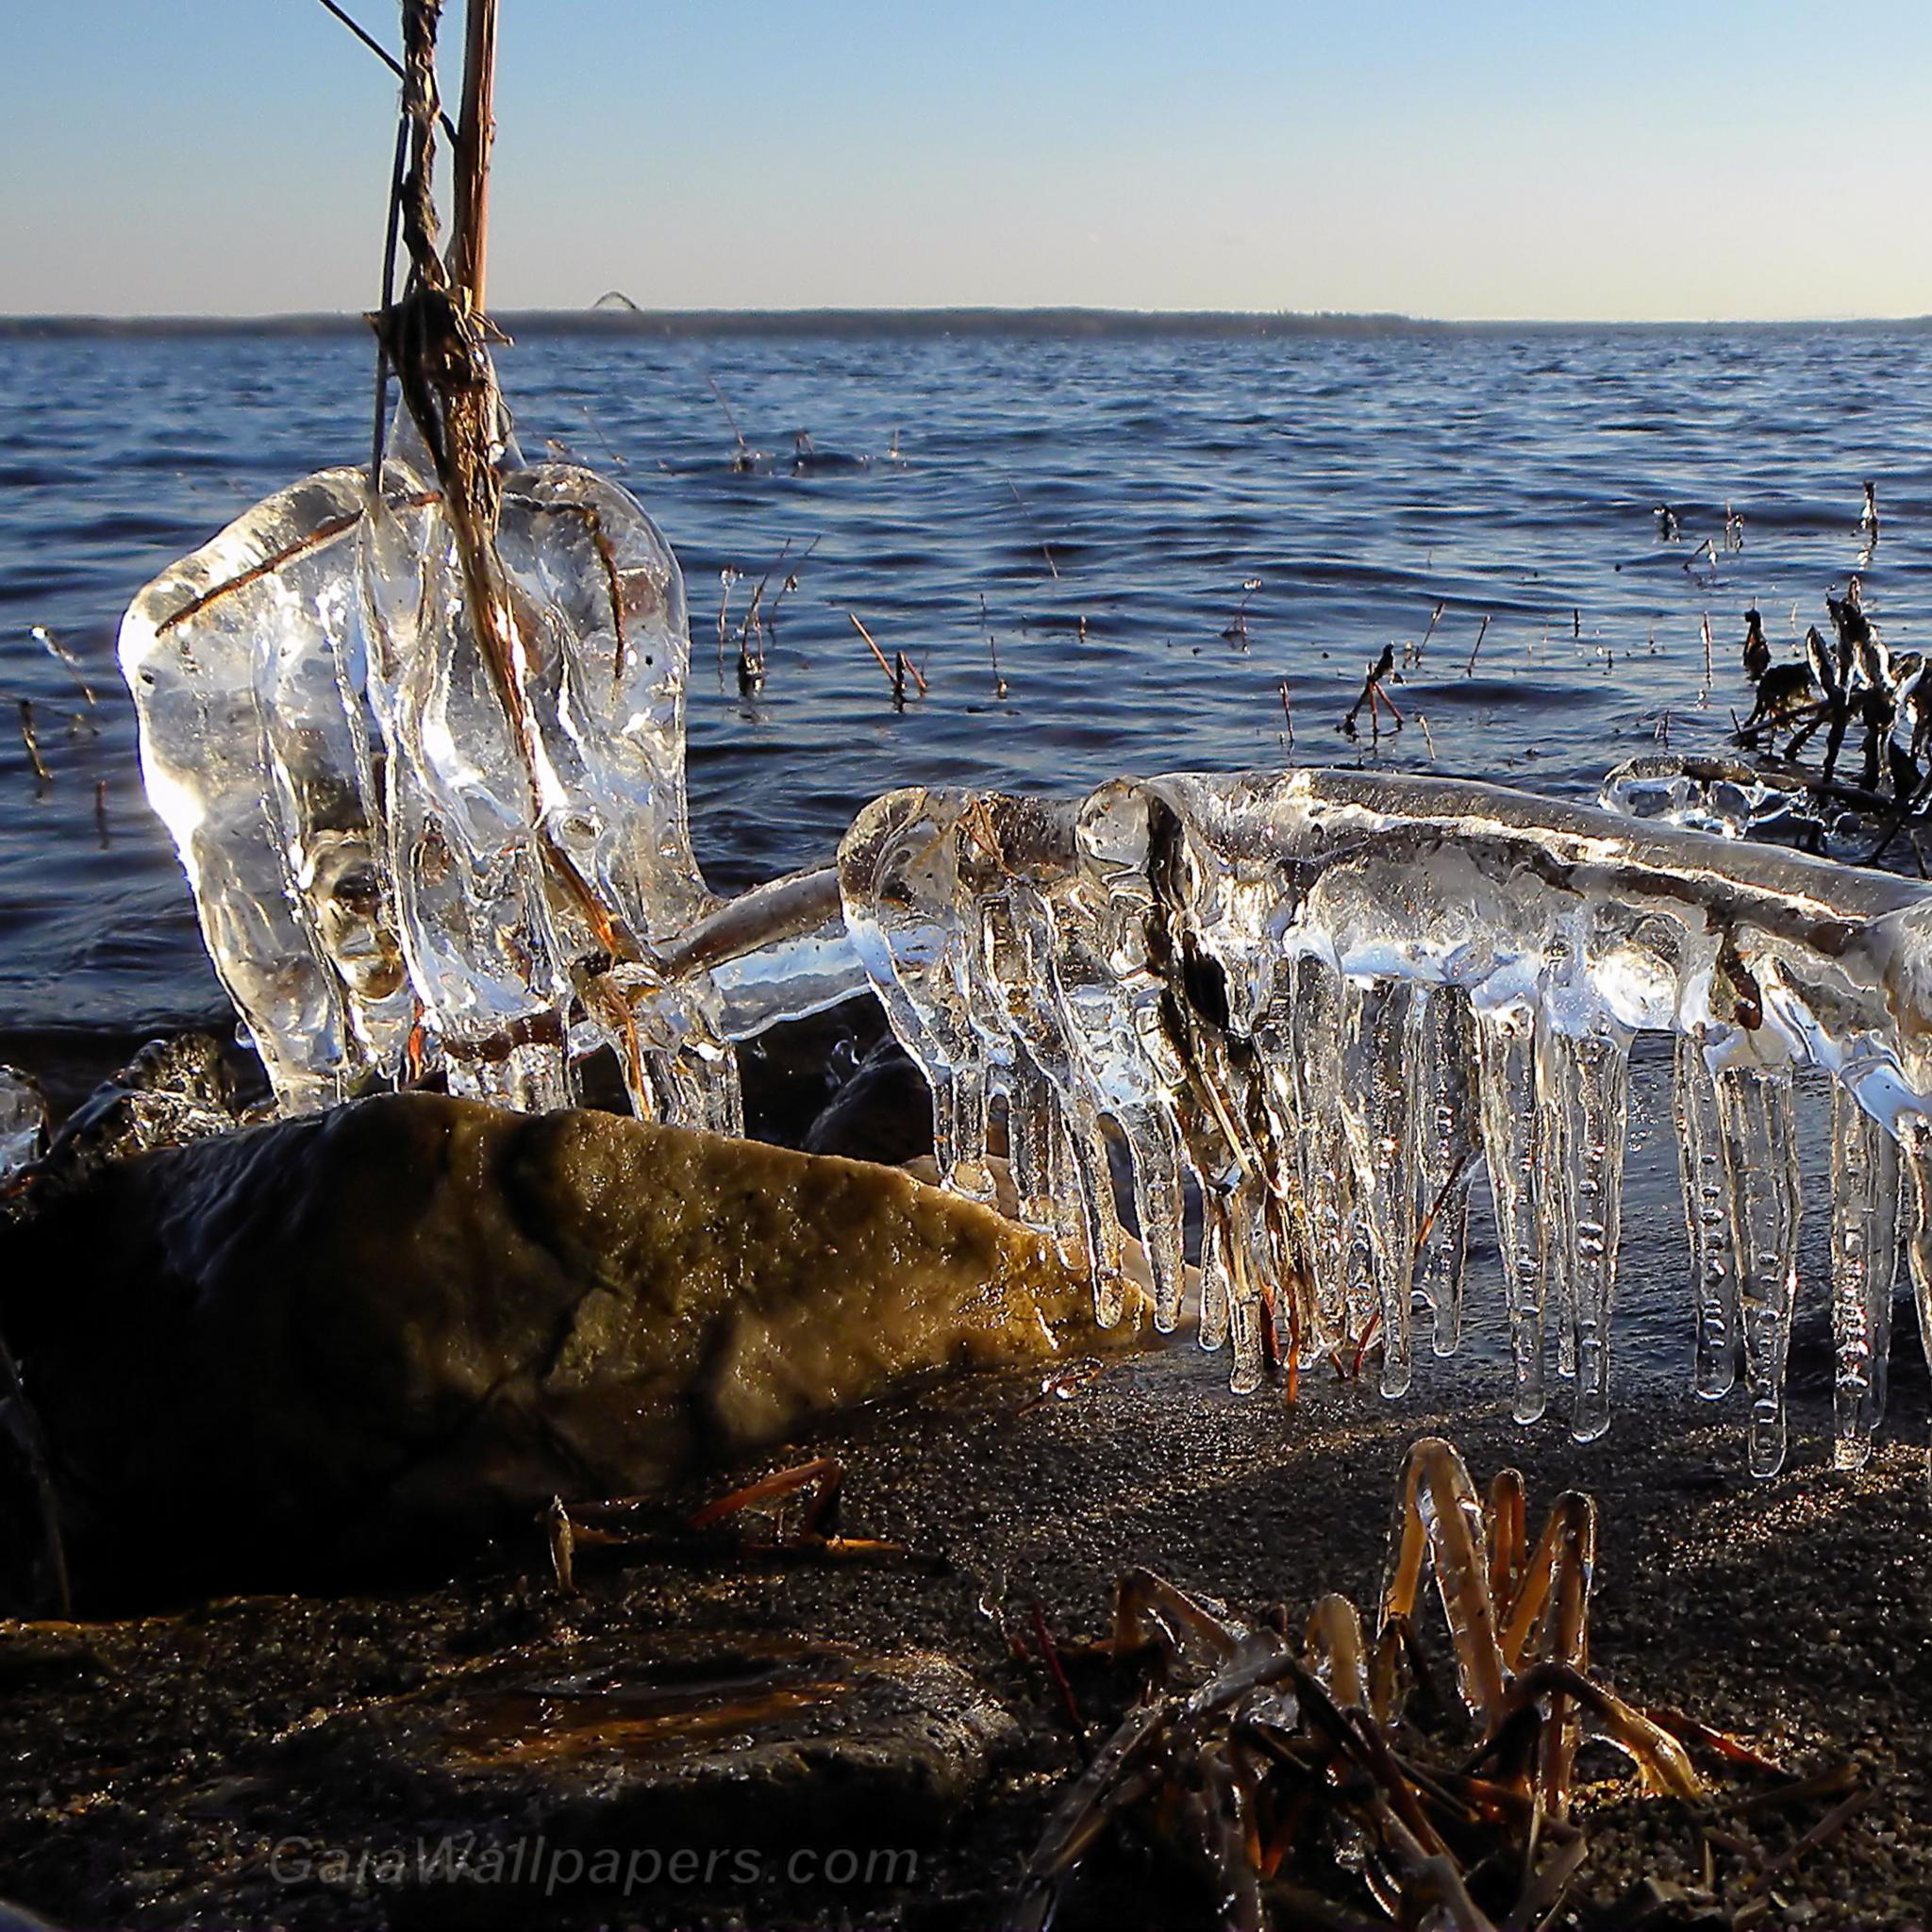 Ice crystallization condemning the last vegetation - Free desktop wallpapers